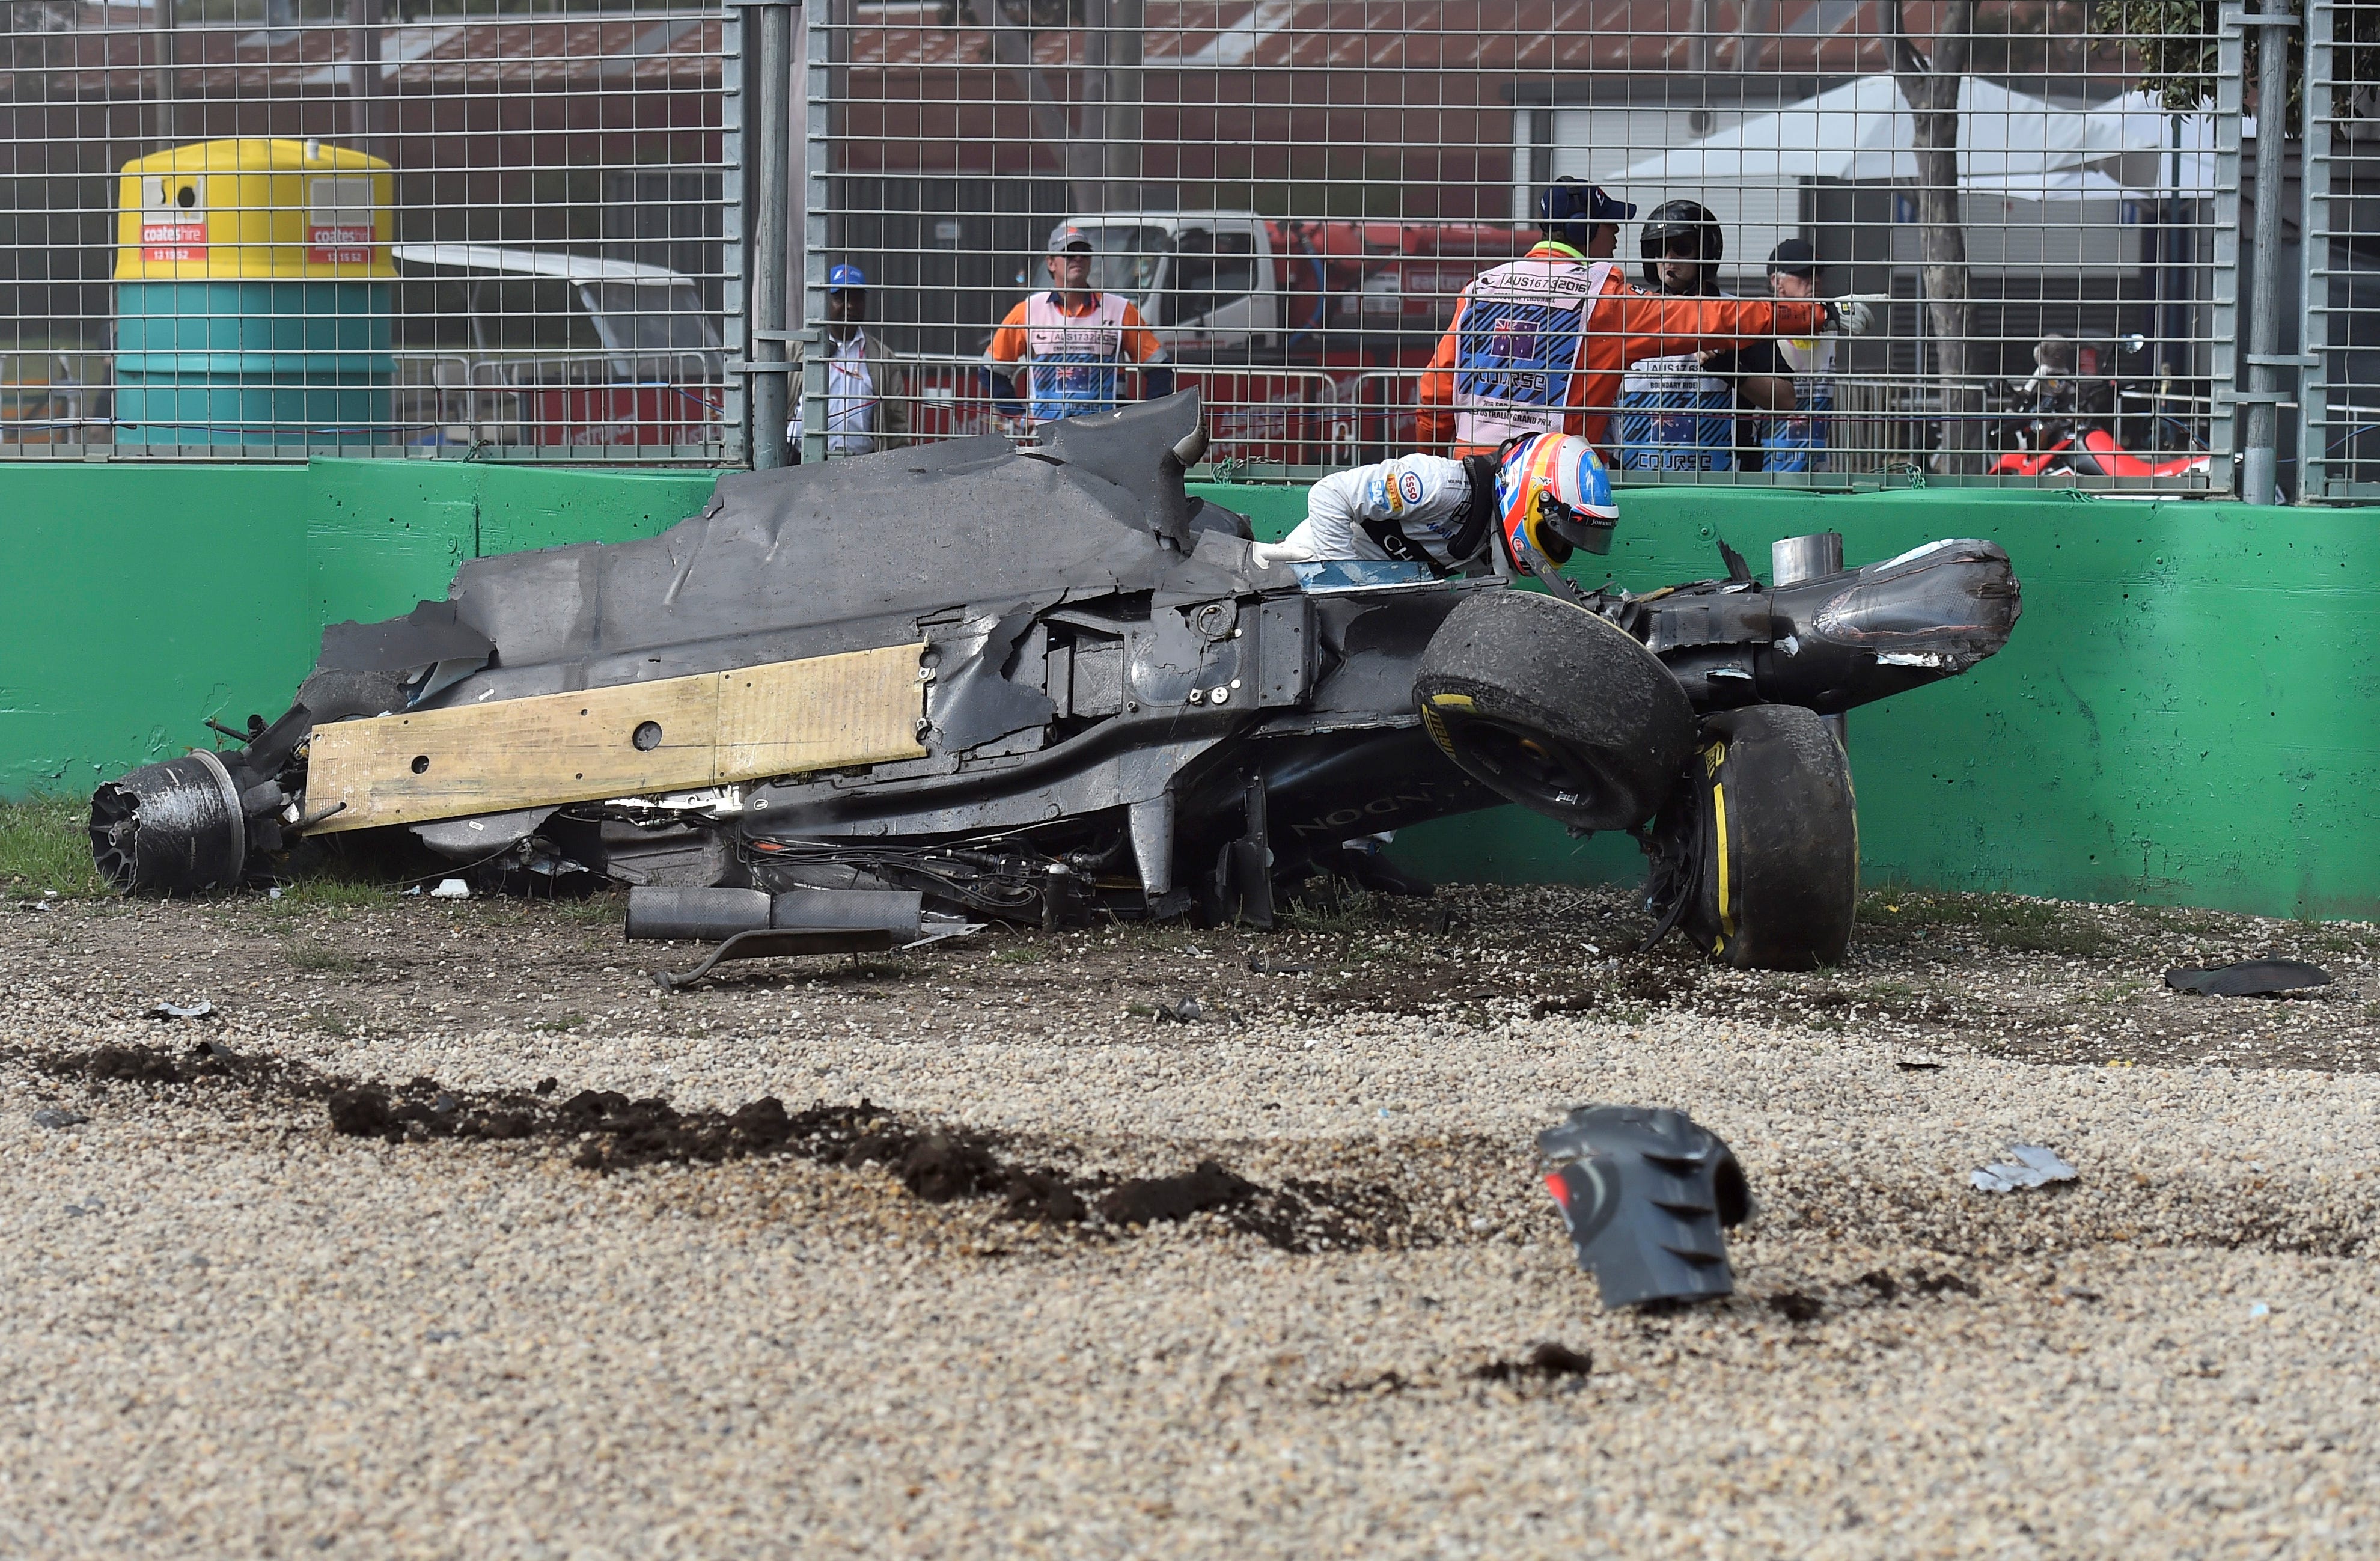 Fernando Alonso flips car after dramatic collision at Australian Grand Prix  | wltx.com